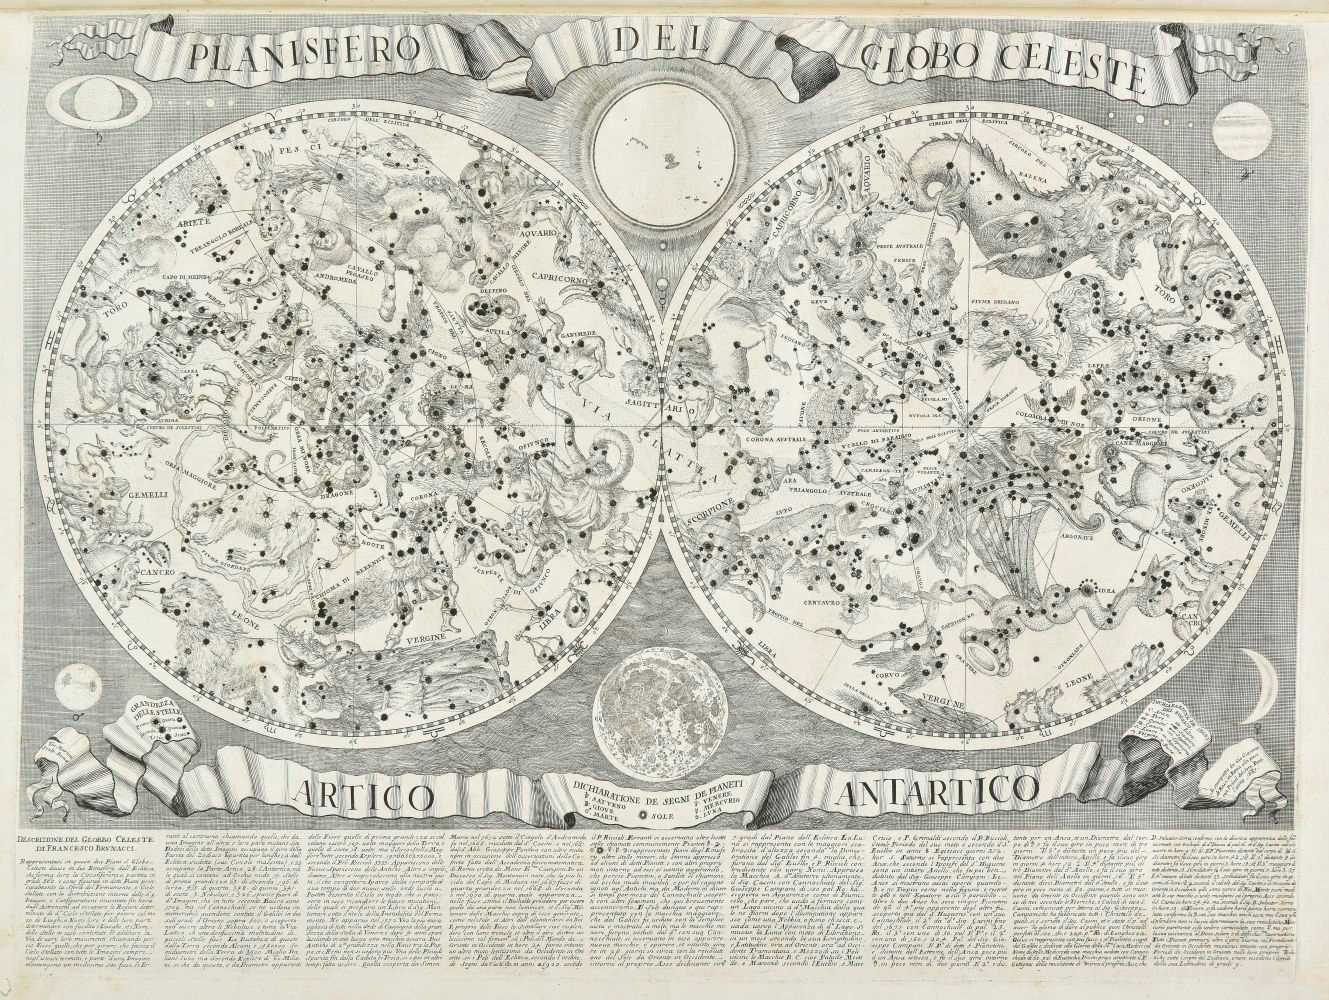 Lot 143 - Rossi (Giacomo Giovanni de). Atlas Mercurio Geografico, circa 1692